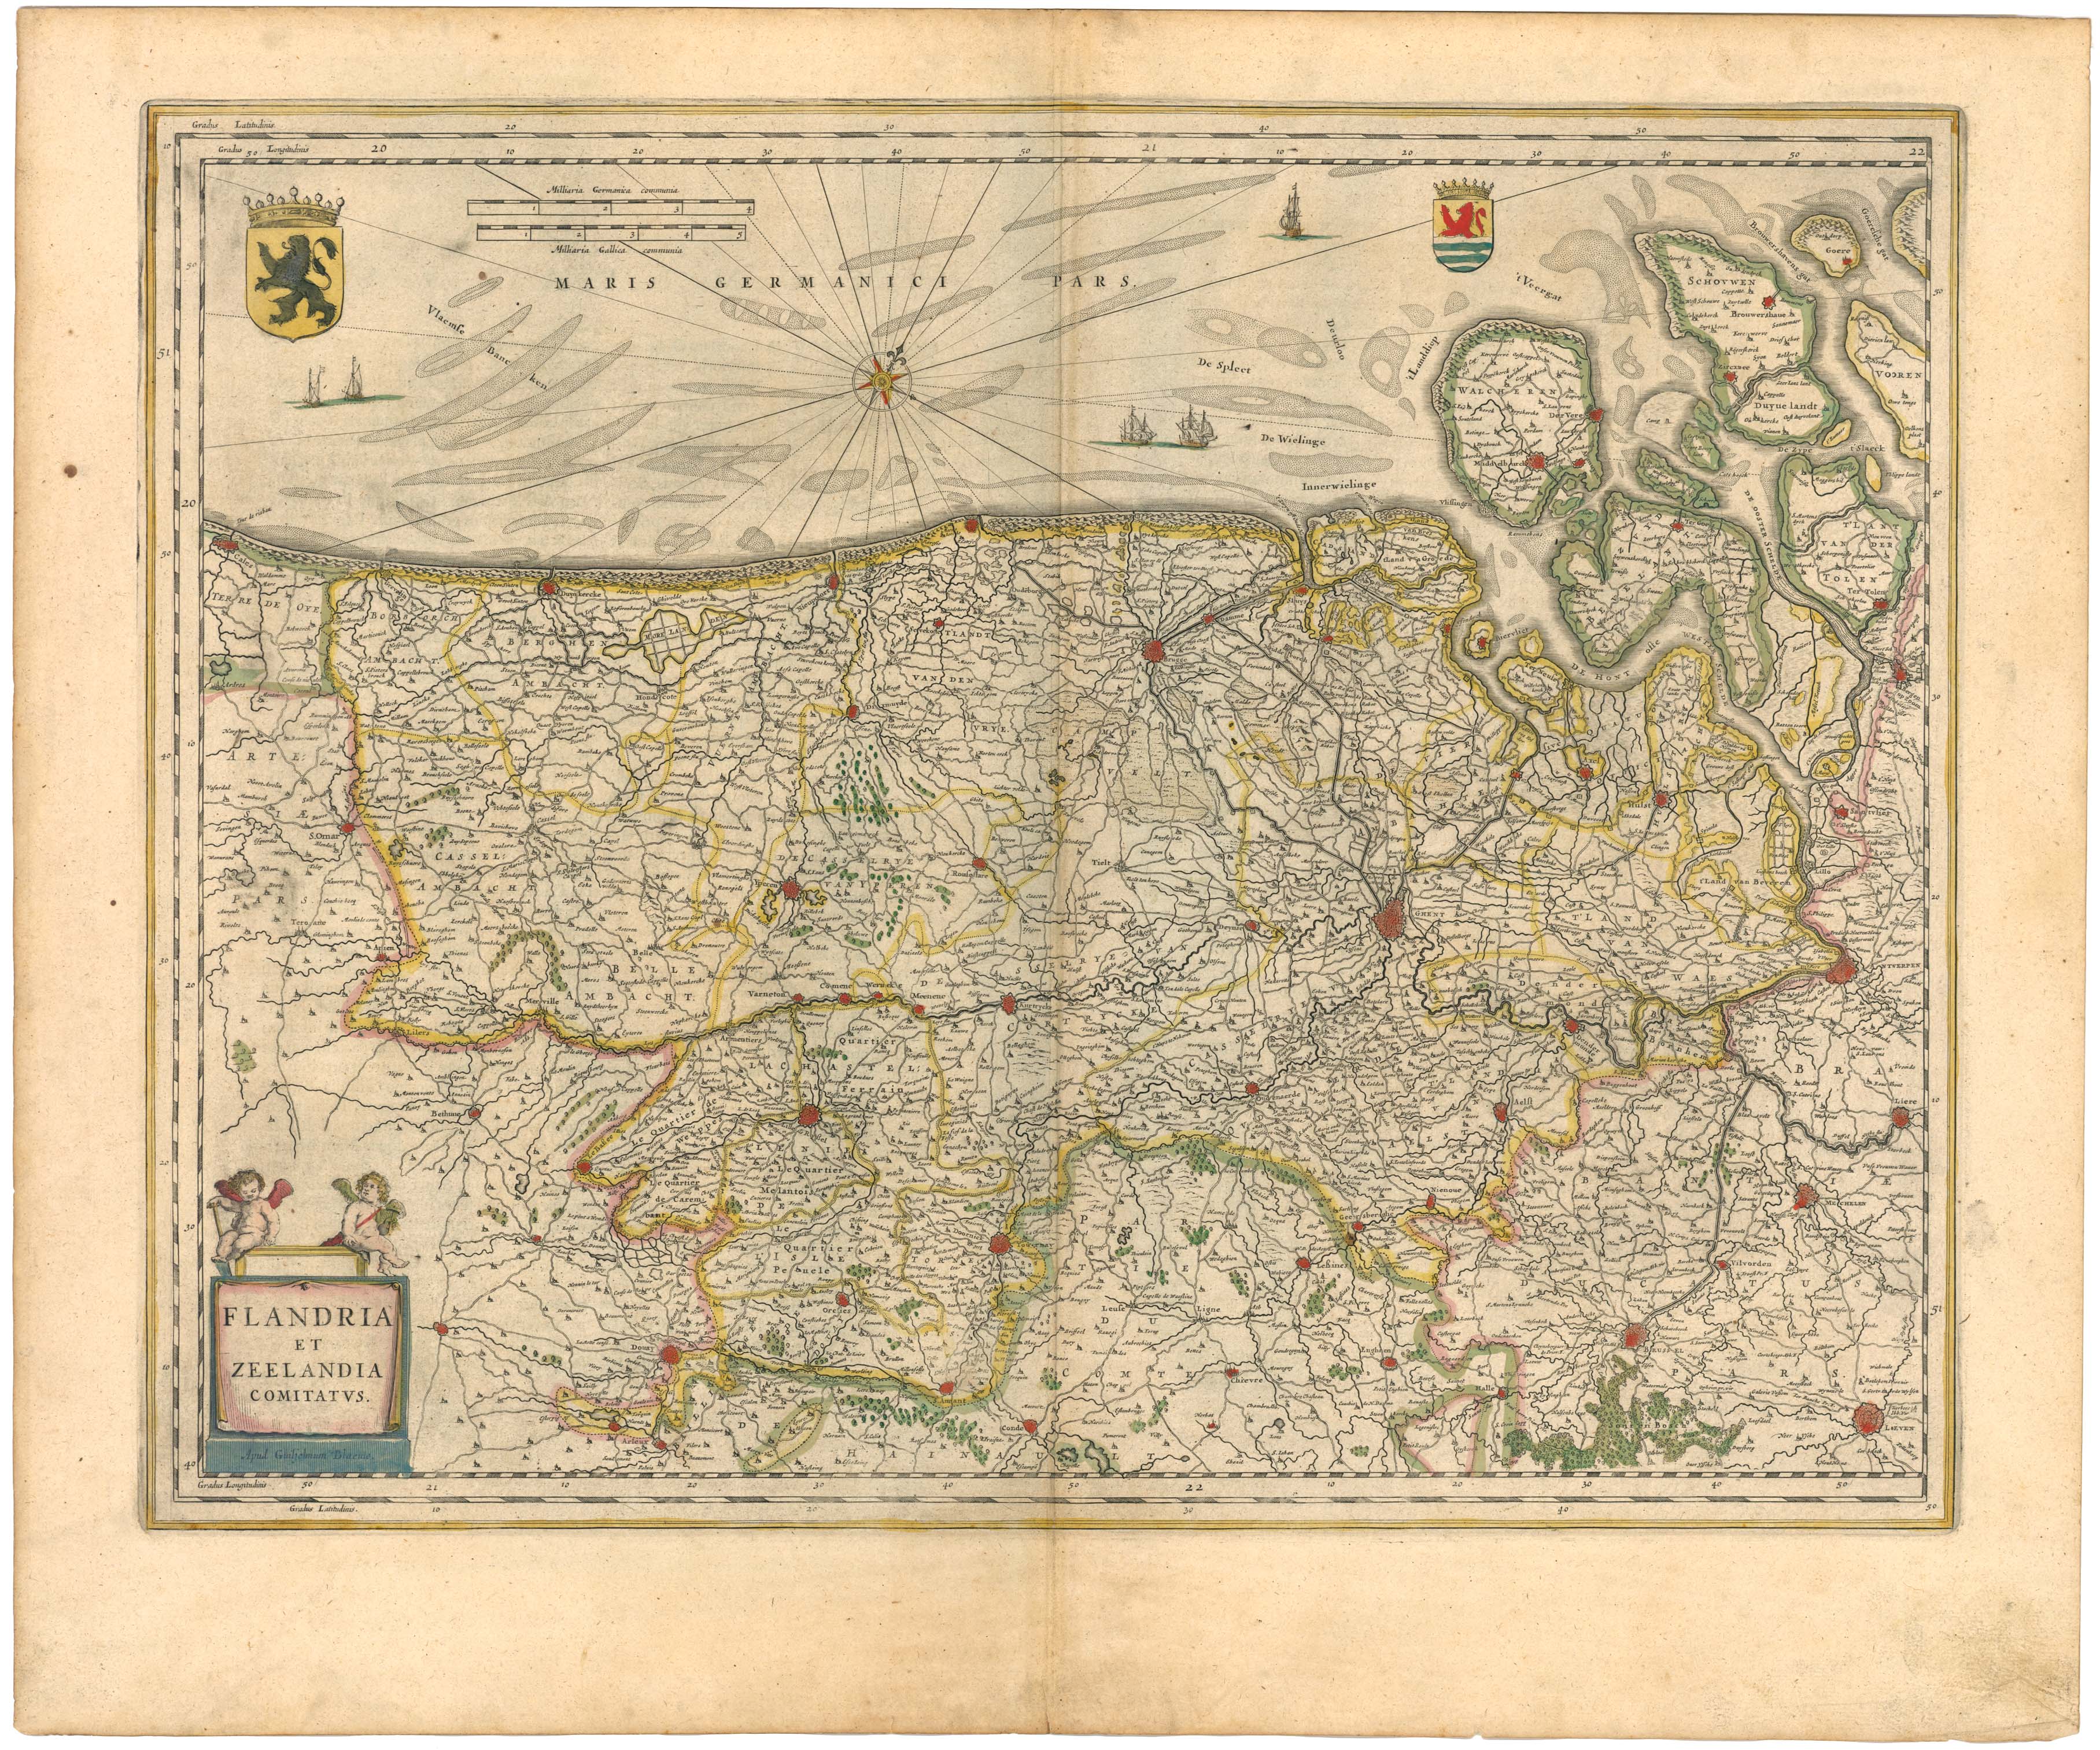 Blaeu 1645 - Flandria et Zeelandia Comitatus